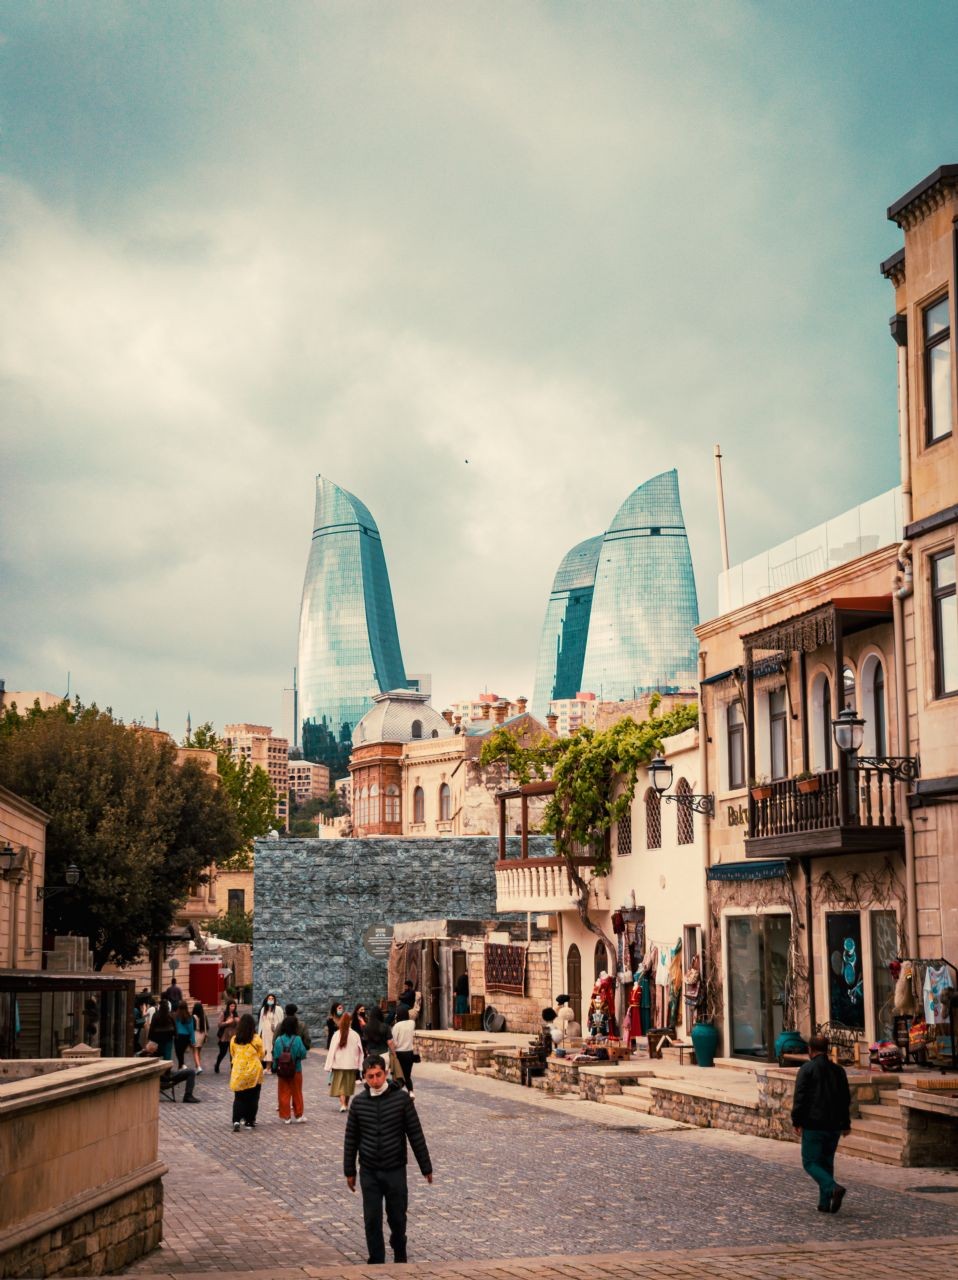 Old City (Icherisheher) The Old City of Baku